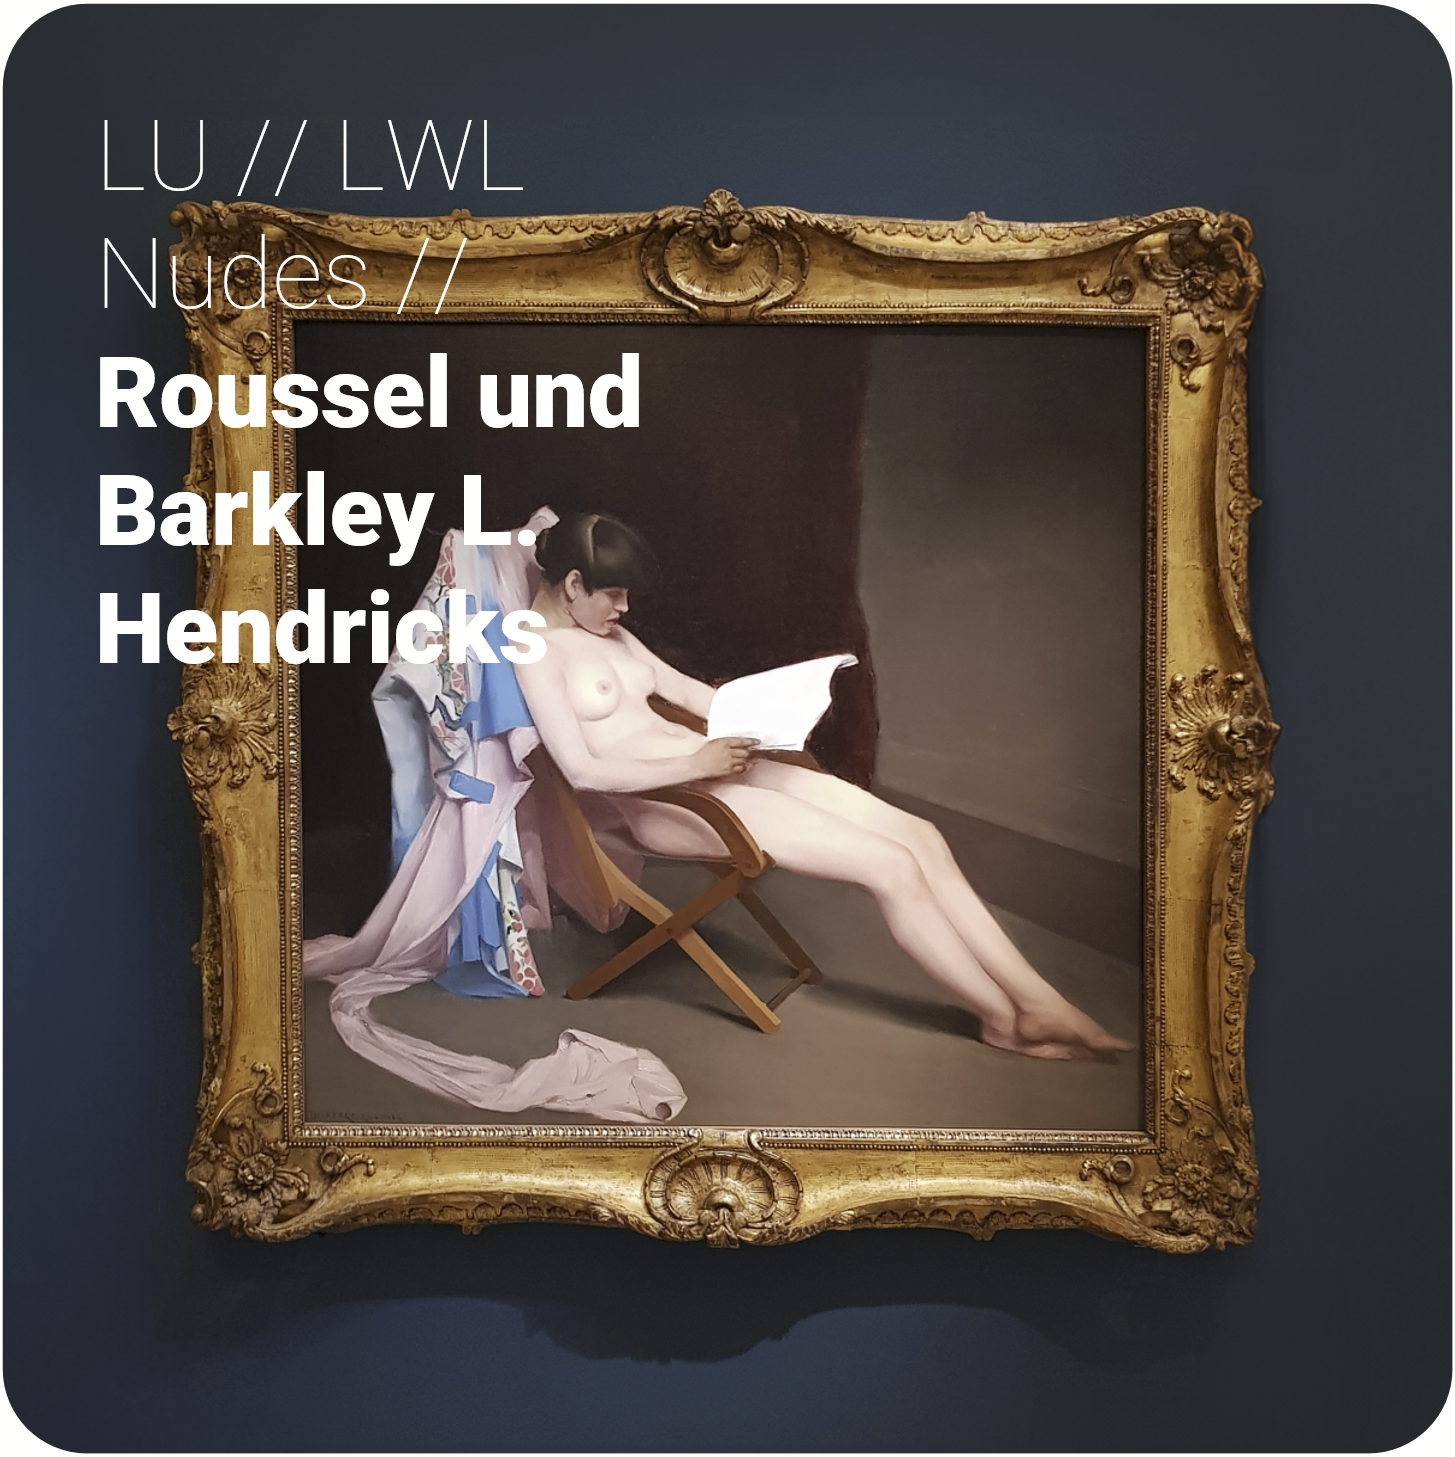 LU // LWL Nudes // Roussel und Barkley L. Hendricks